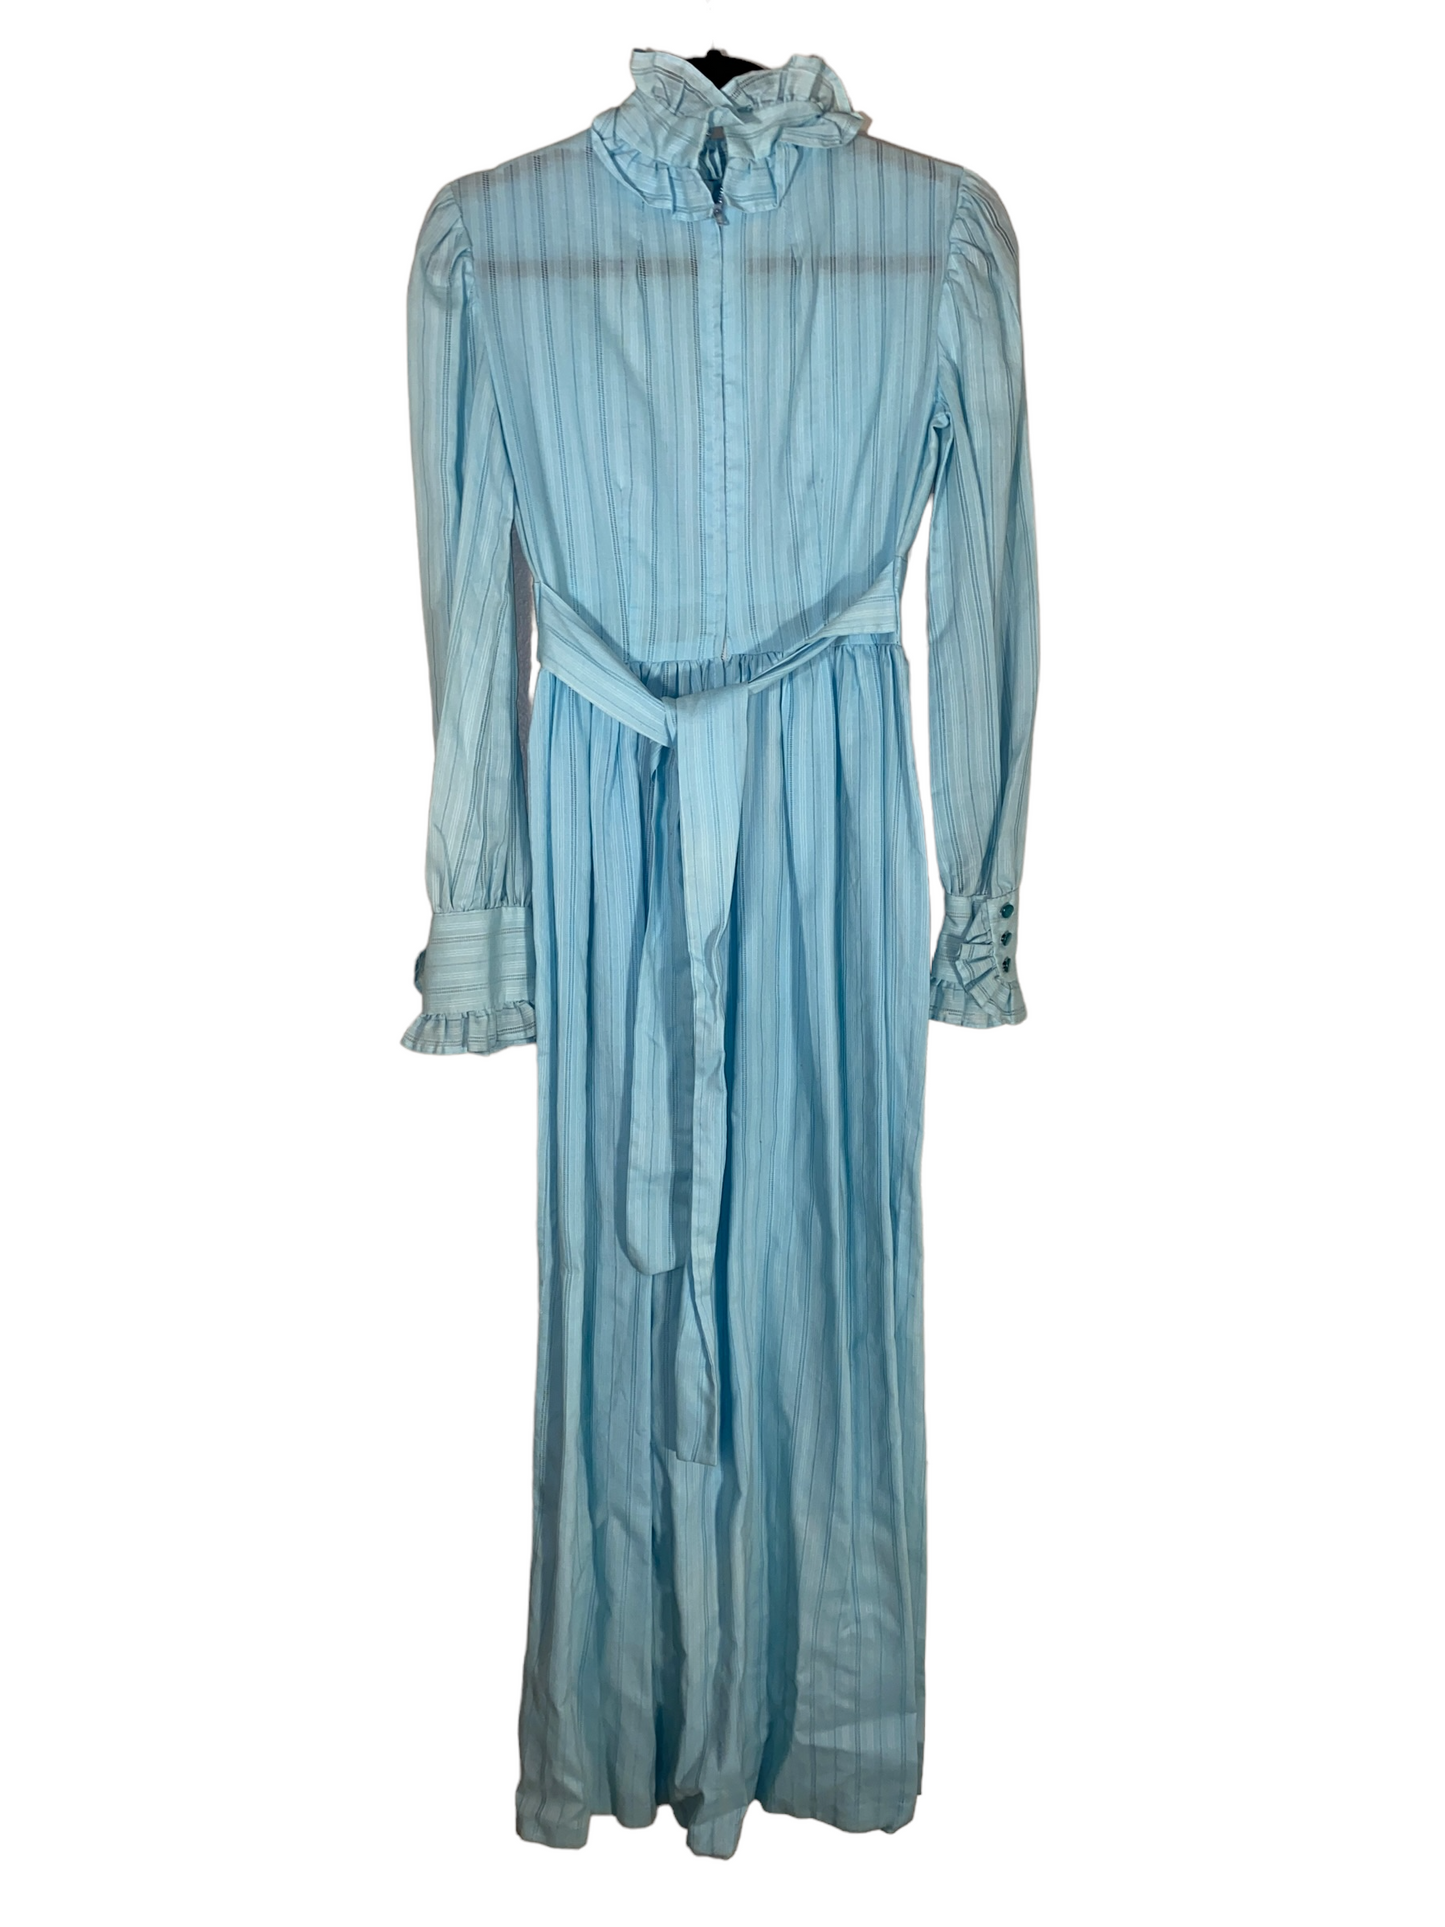 1960s Bib Style Prairie Dress (XS/0)